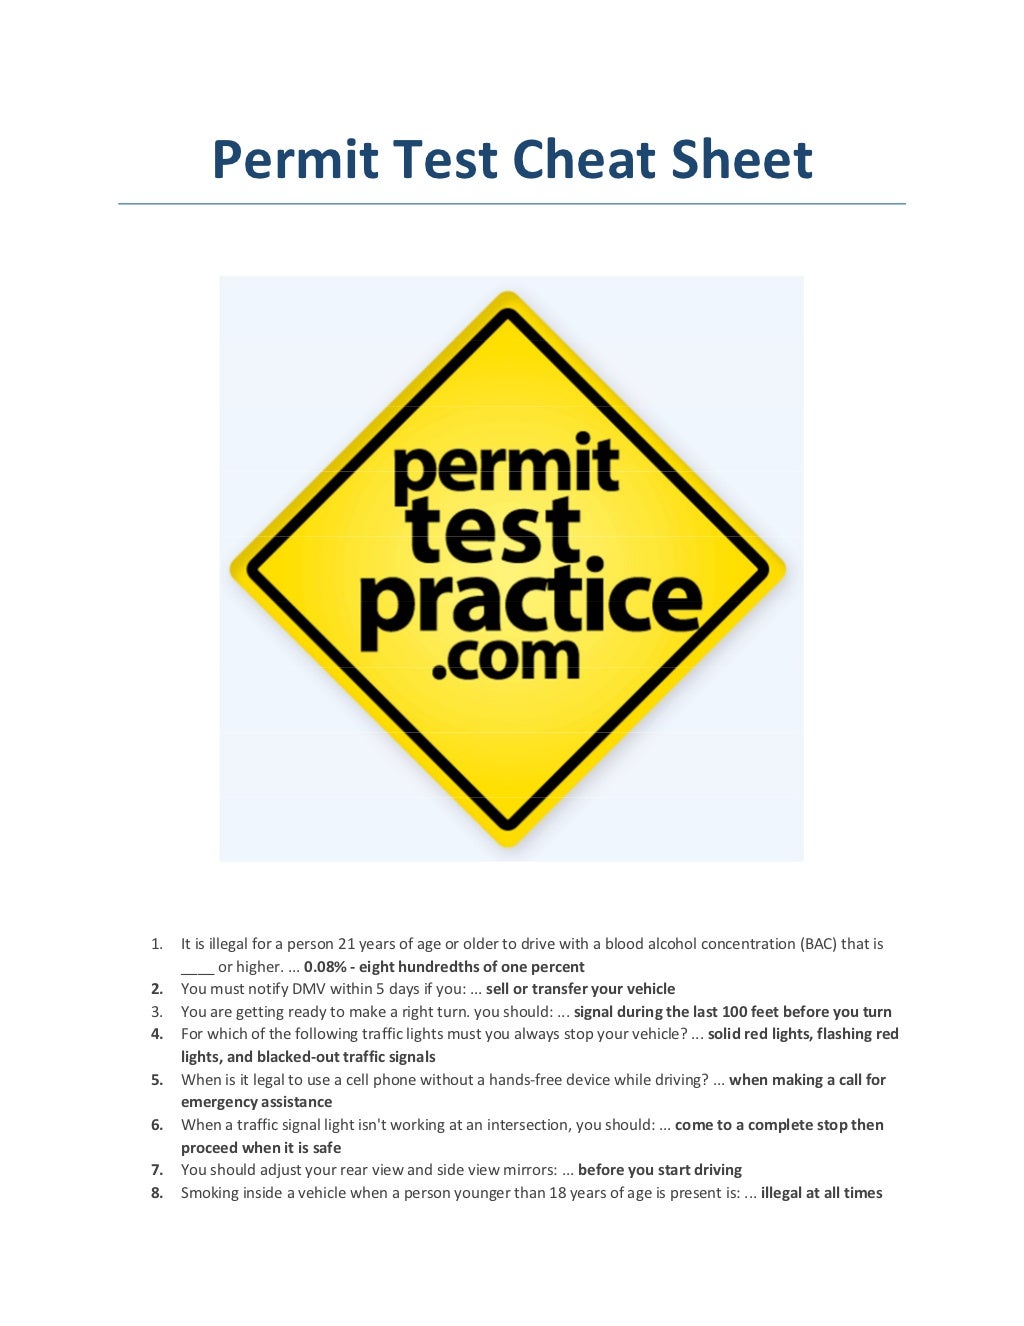 dmv test cheat sheet free